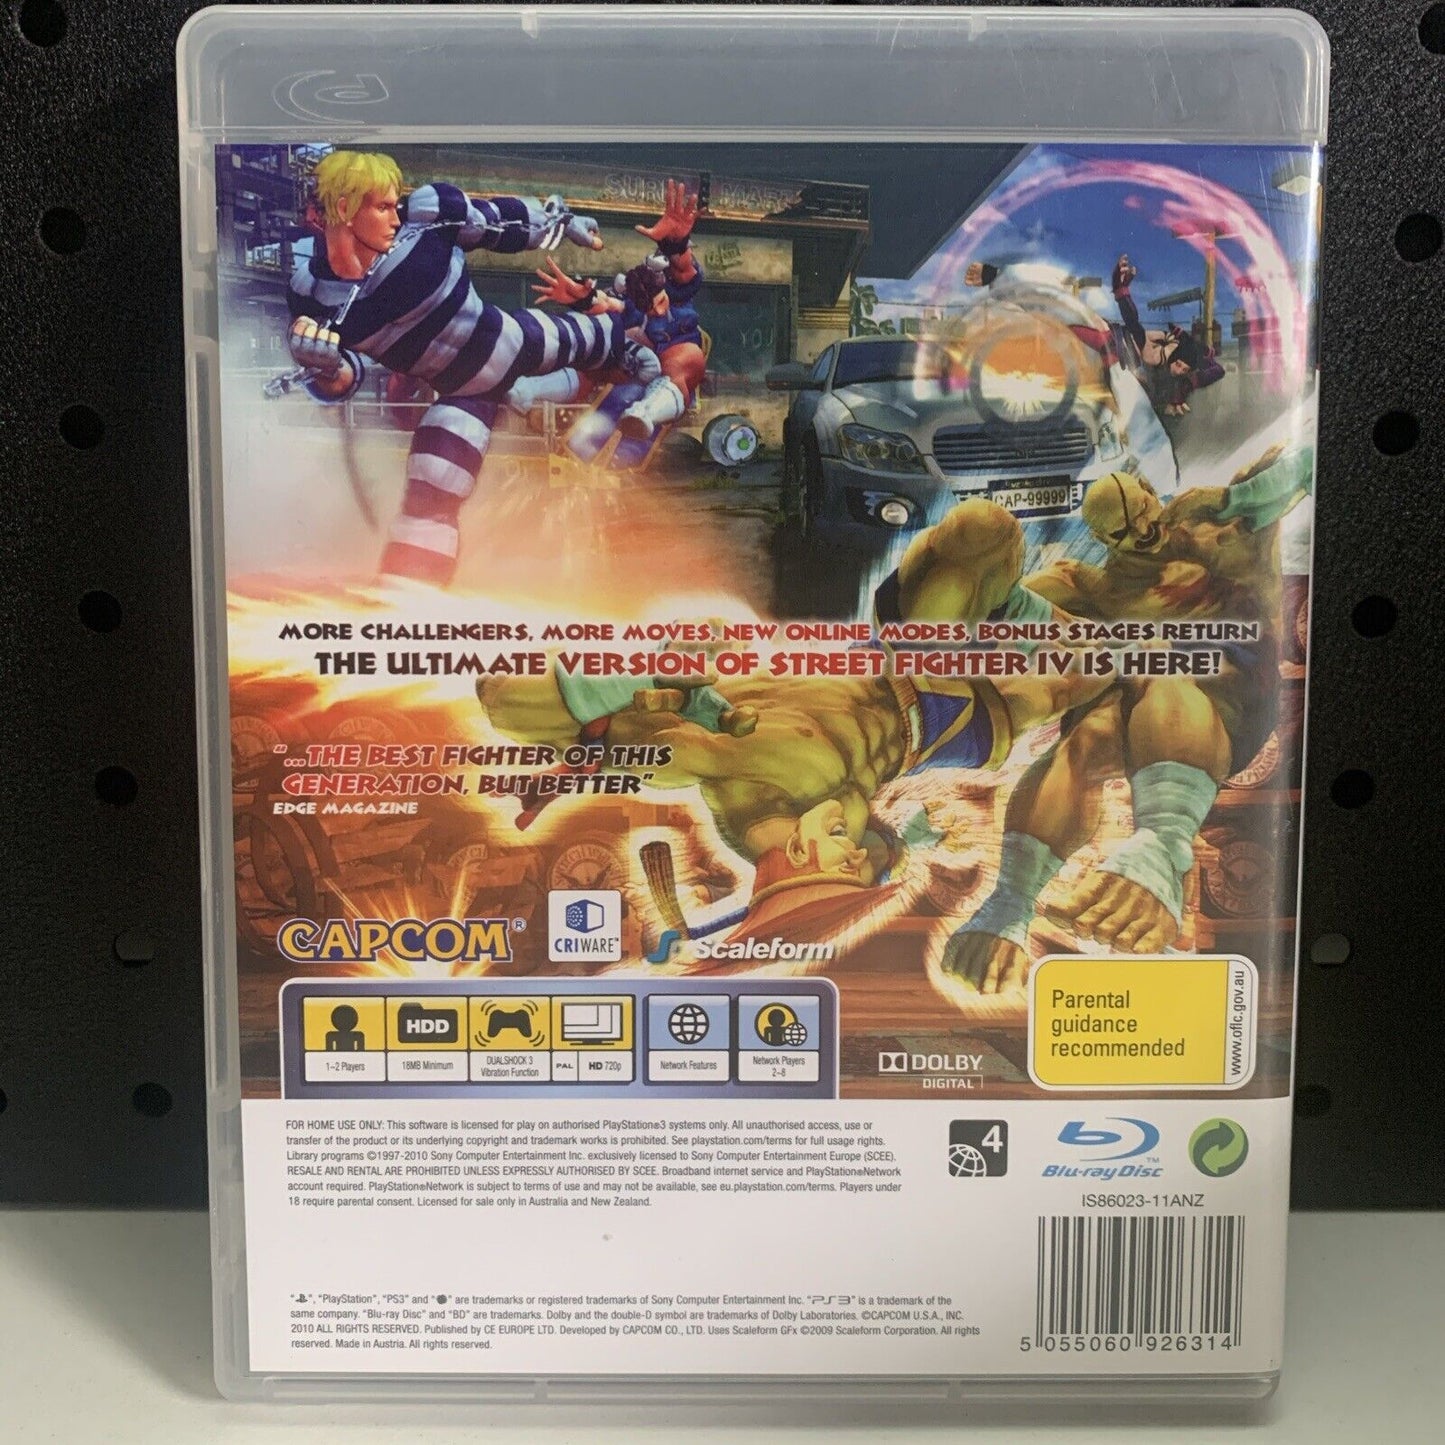 Super Street Fighter IV 4 PlayStation 3 PS3 Game